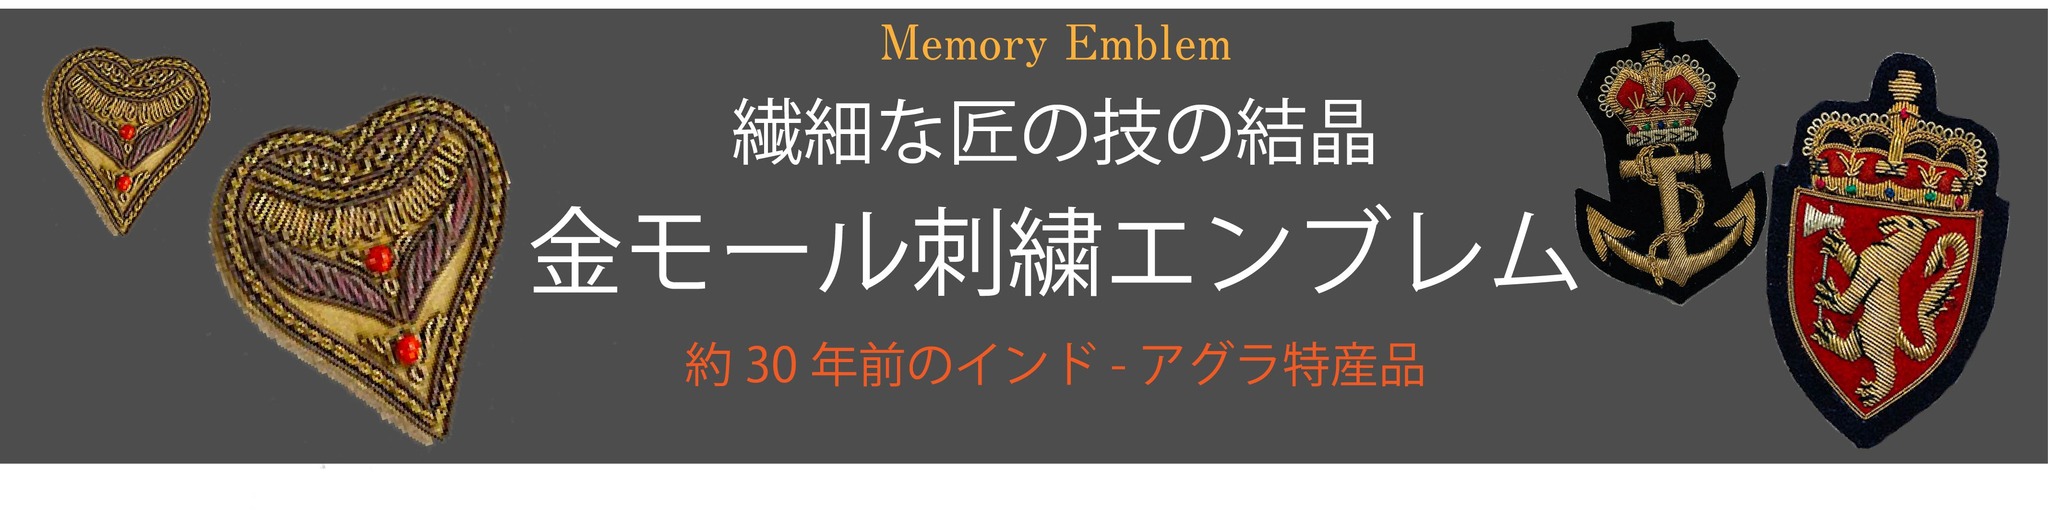  Memory emblem